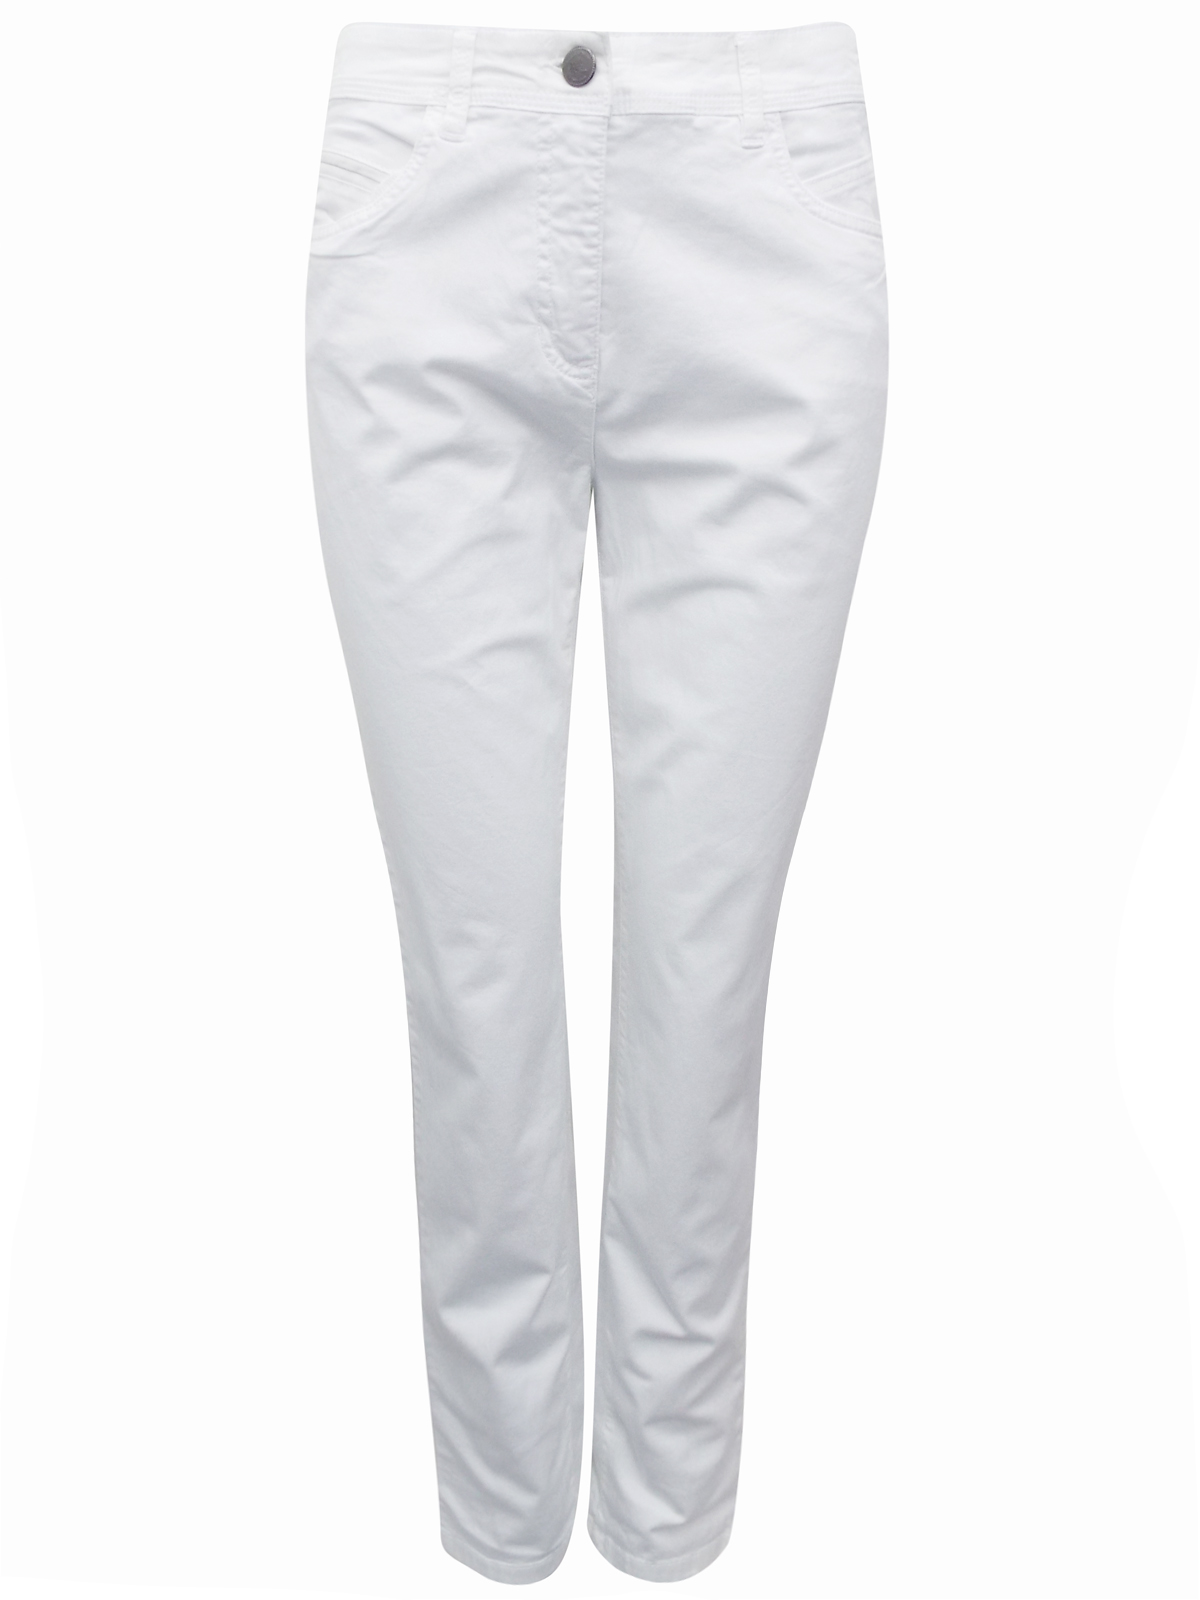 C&A - - C&A WHITE Classic Fit 5-Pcoket Denim Jeans - Size 8 to 16 (EU ...